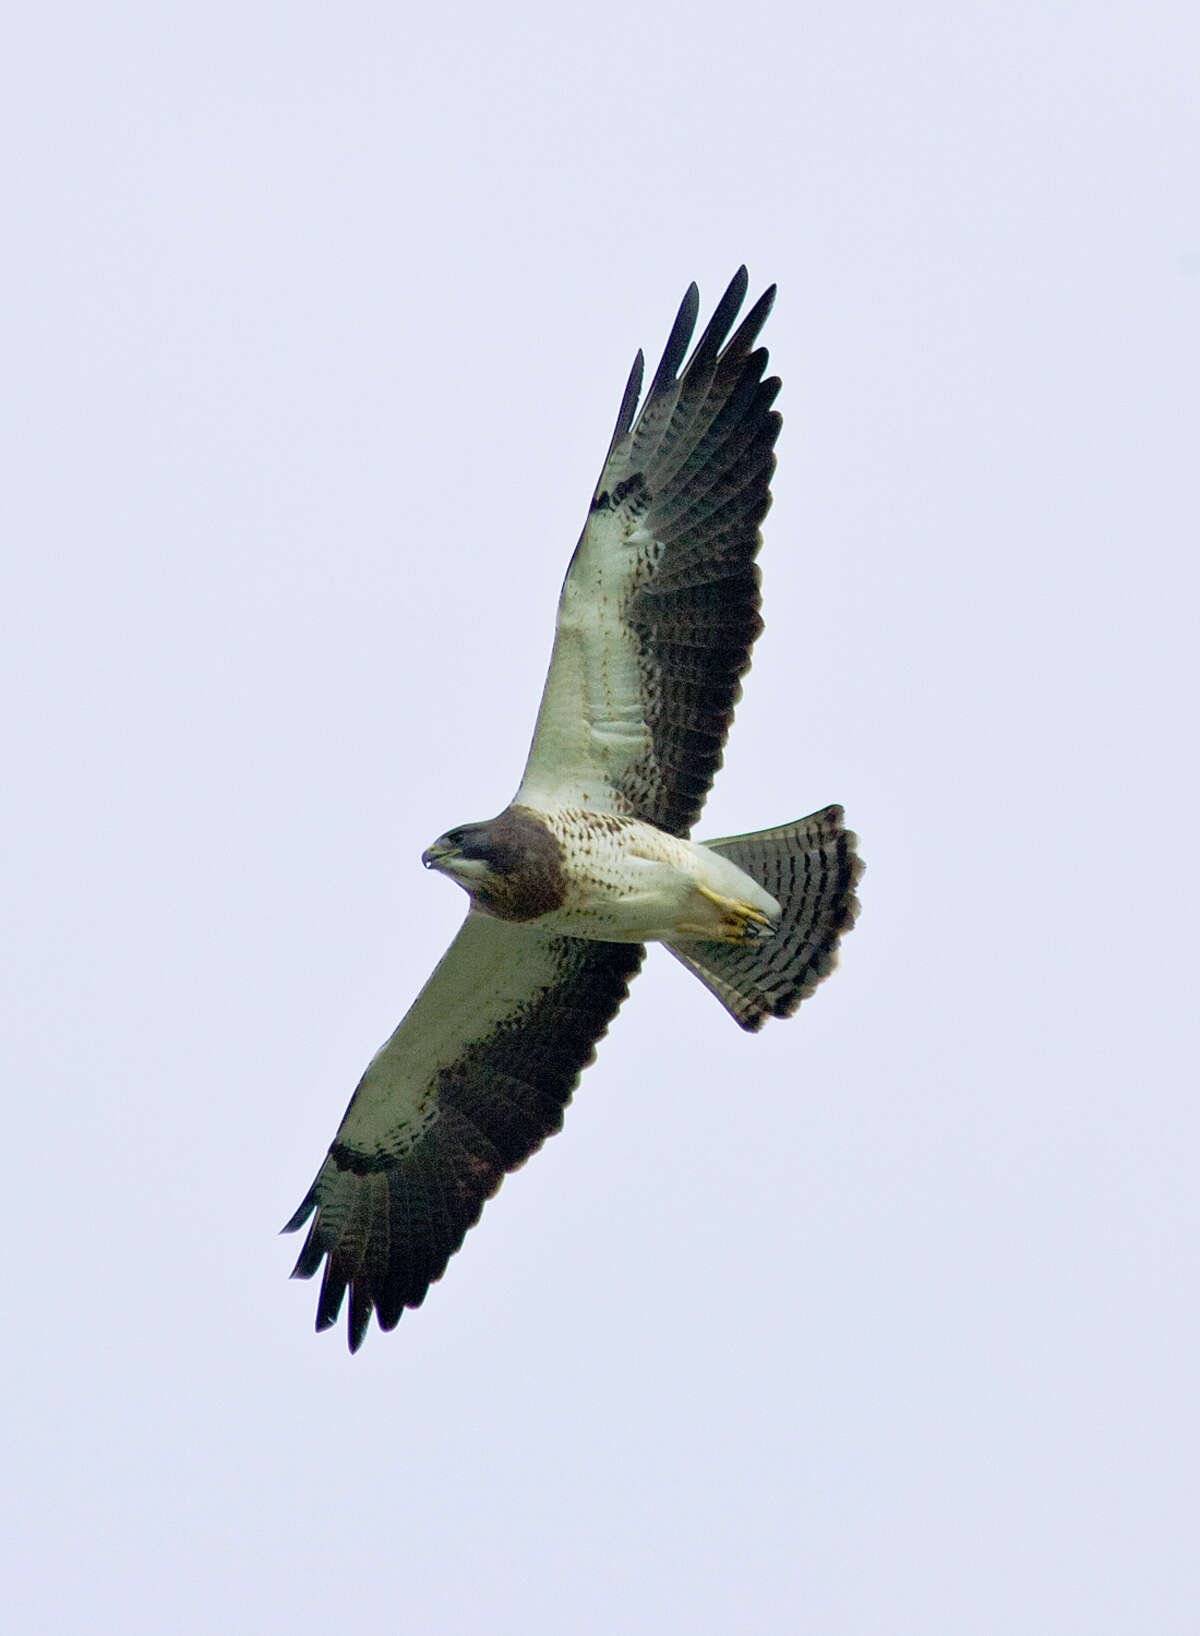 A Swainson's hawk sailed overhead on a recent bird walk at Tony Marron Park along Buffalo Bayou in east Houston. The walk was part of the Buffalo Bayou Partnership's Summer Species Walking Tour.